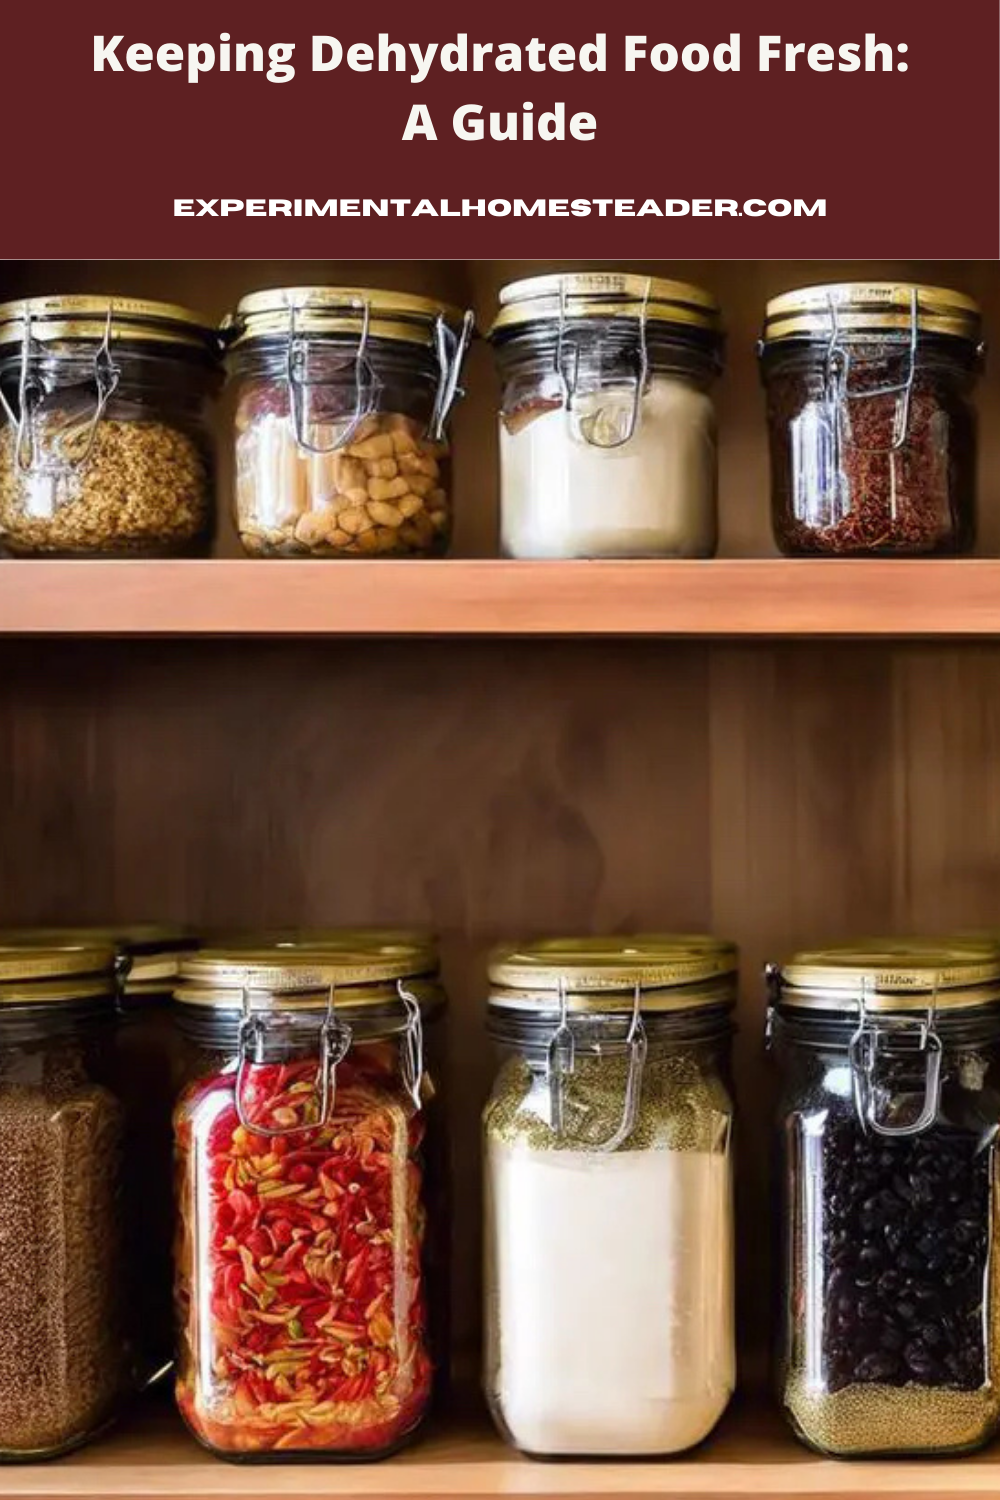 Dried food in glass jars on a shelf.